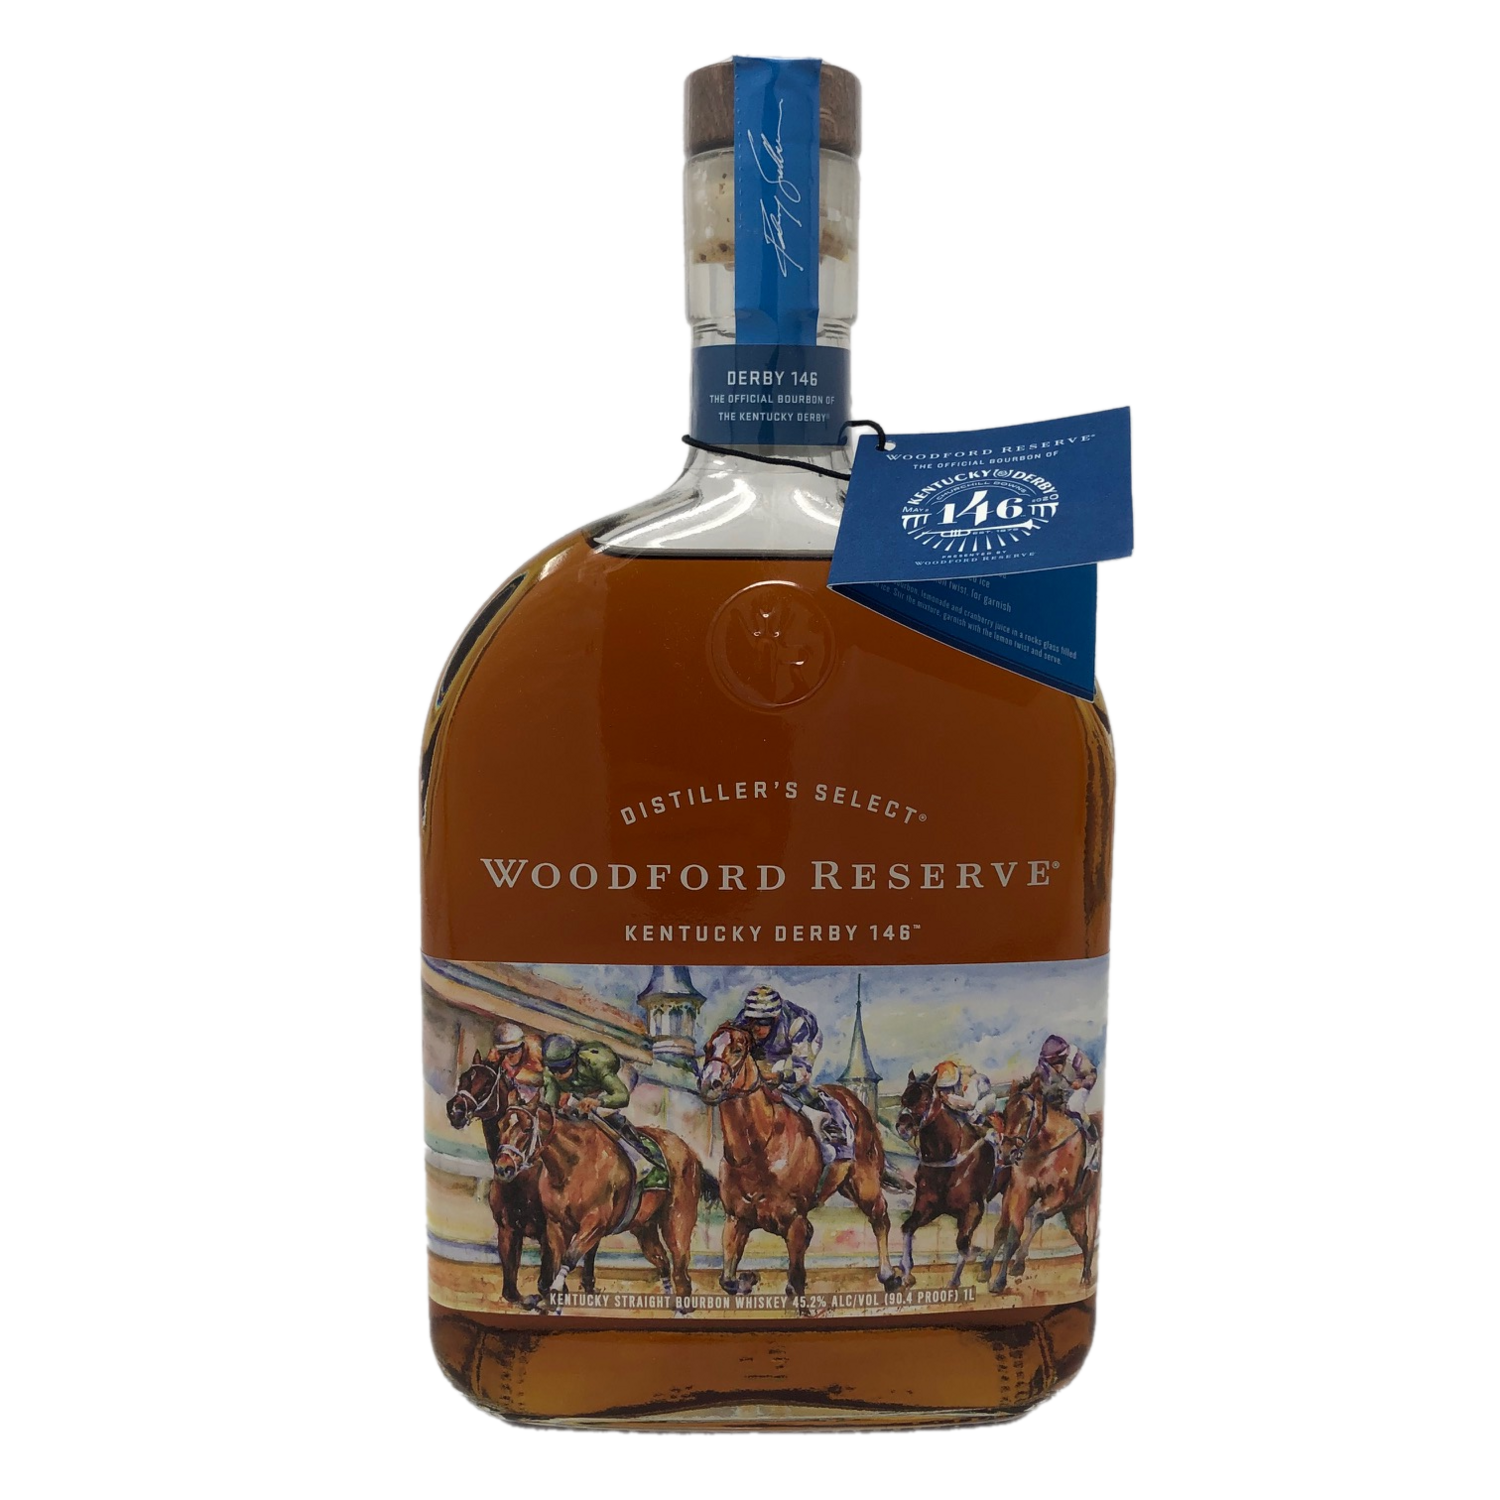 Woodford Reserve Kentucky Derby 146 (2020) Kentucky Straight Bourbon Whiskey